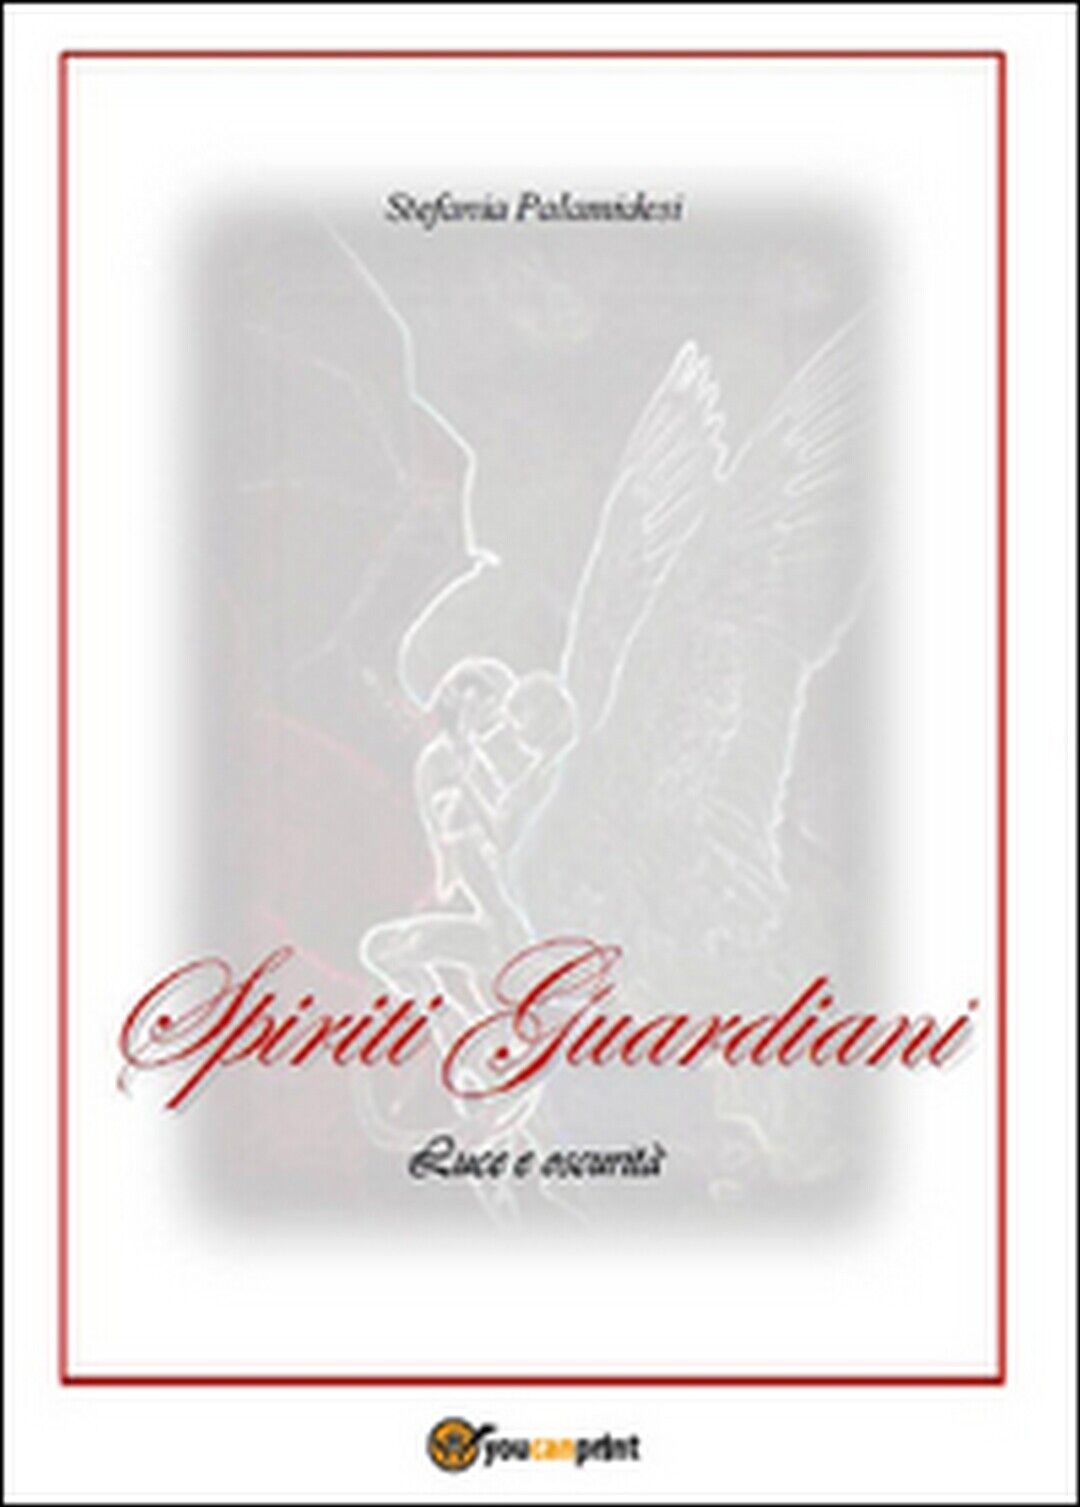 Spiriti guardiani  di Stefania Palamidesi,  2015,  Youcanprint